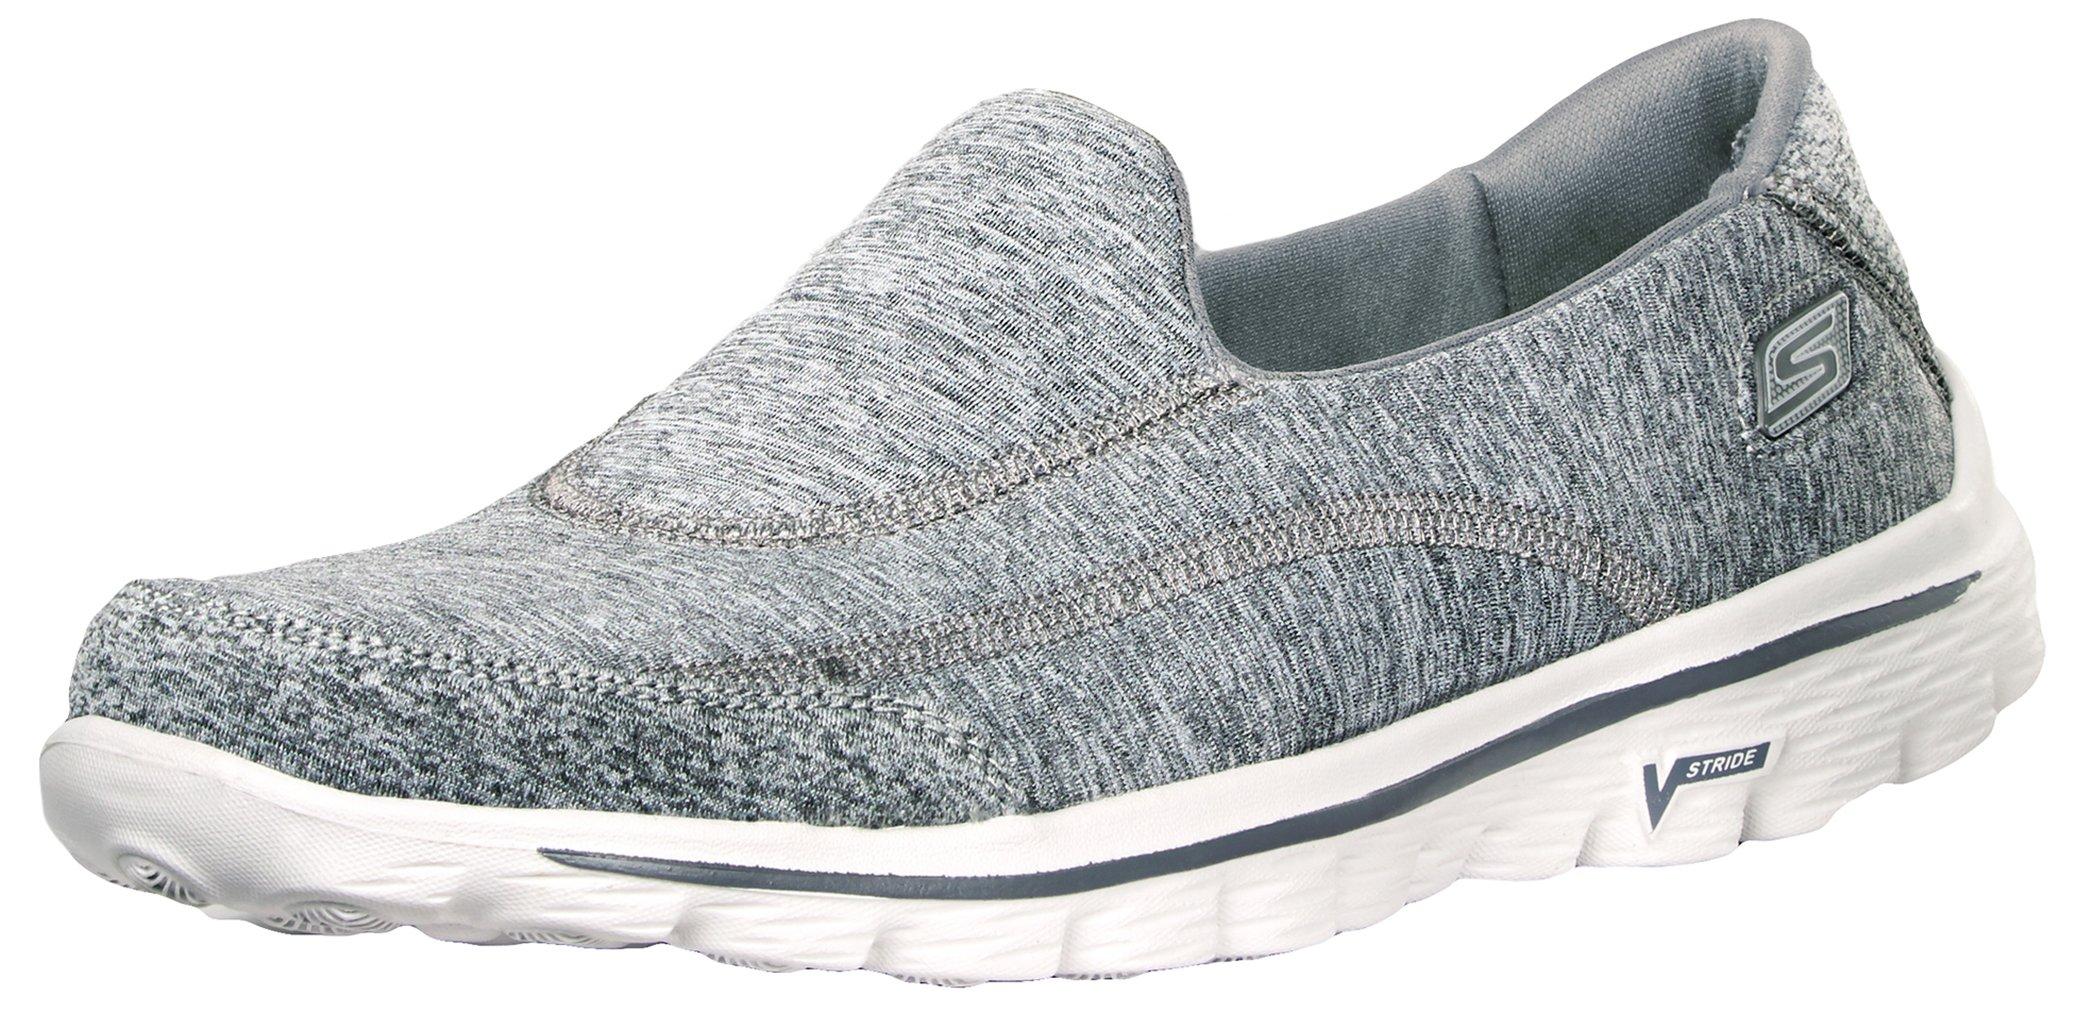 Skechers Synthetic Performance Go Walk 2 Slip-on Walking Shoe in Heather  Grey (Gray) - Save 56% | Lyst